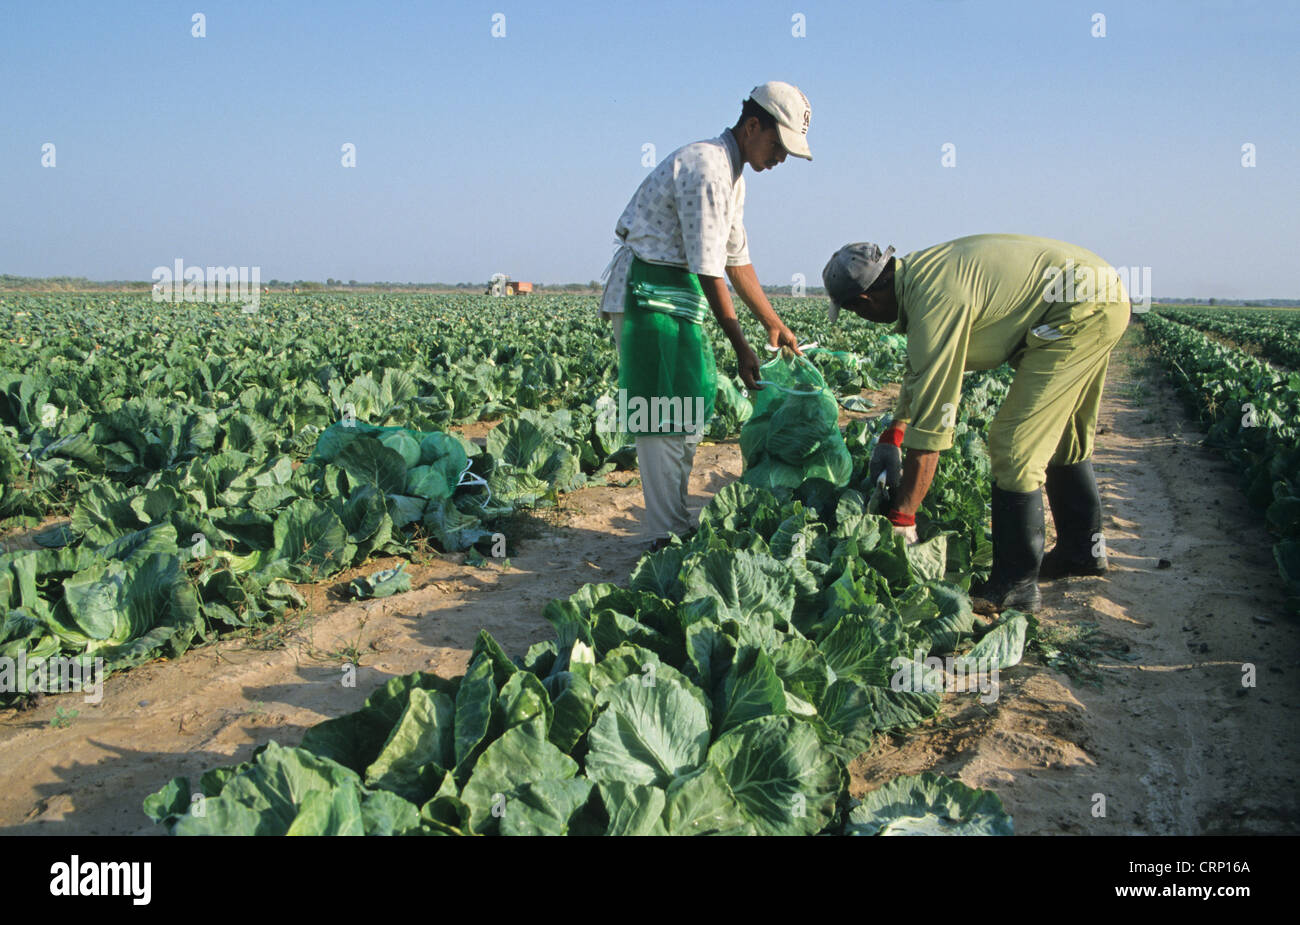 Cabbage (Brassica oleracea) crop, workers harvesting field by hand, Oman Stock Photo